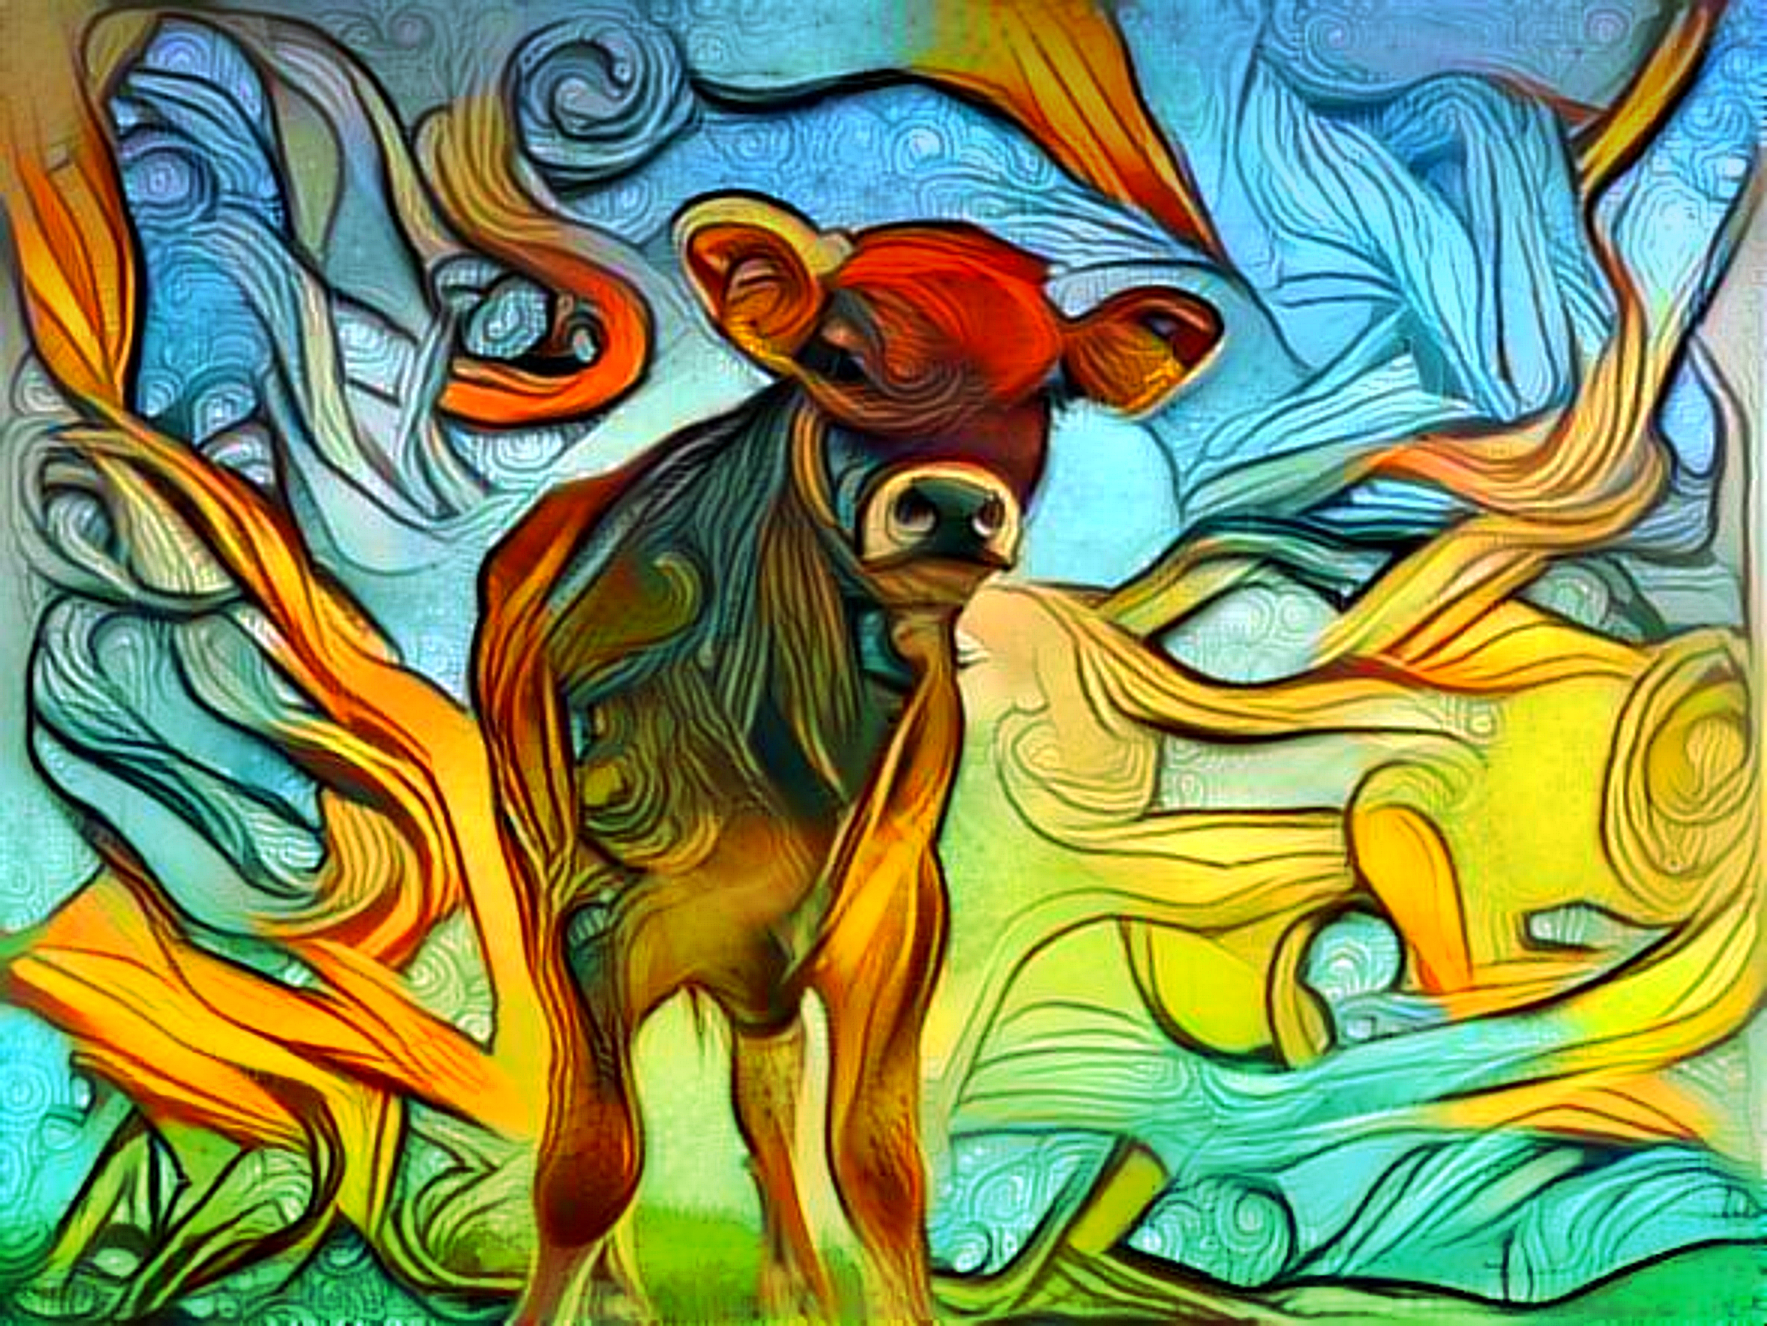 A calf as art by NatureWorshiper